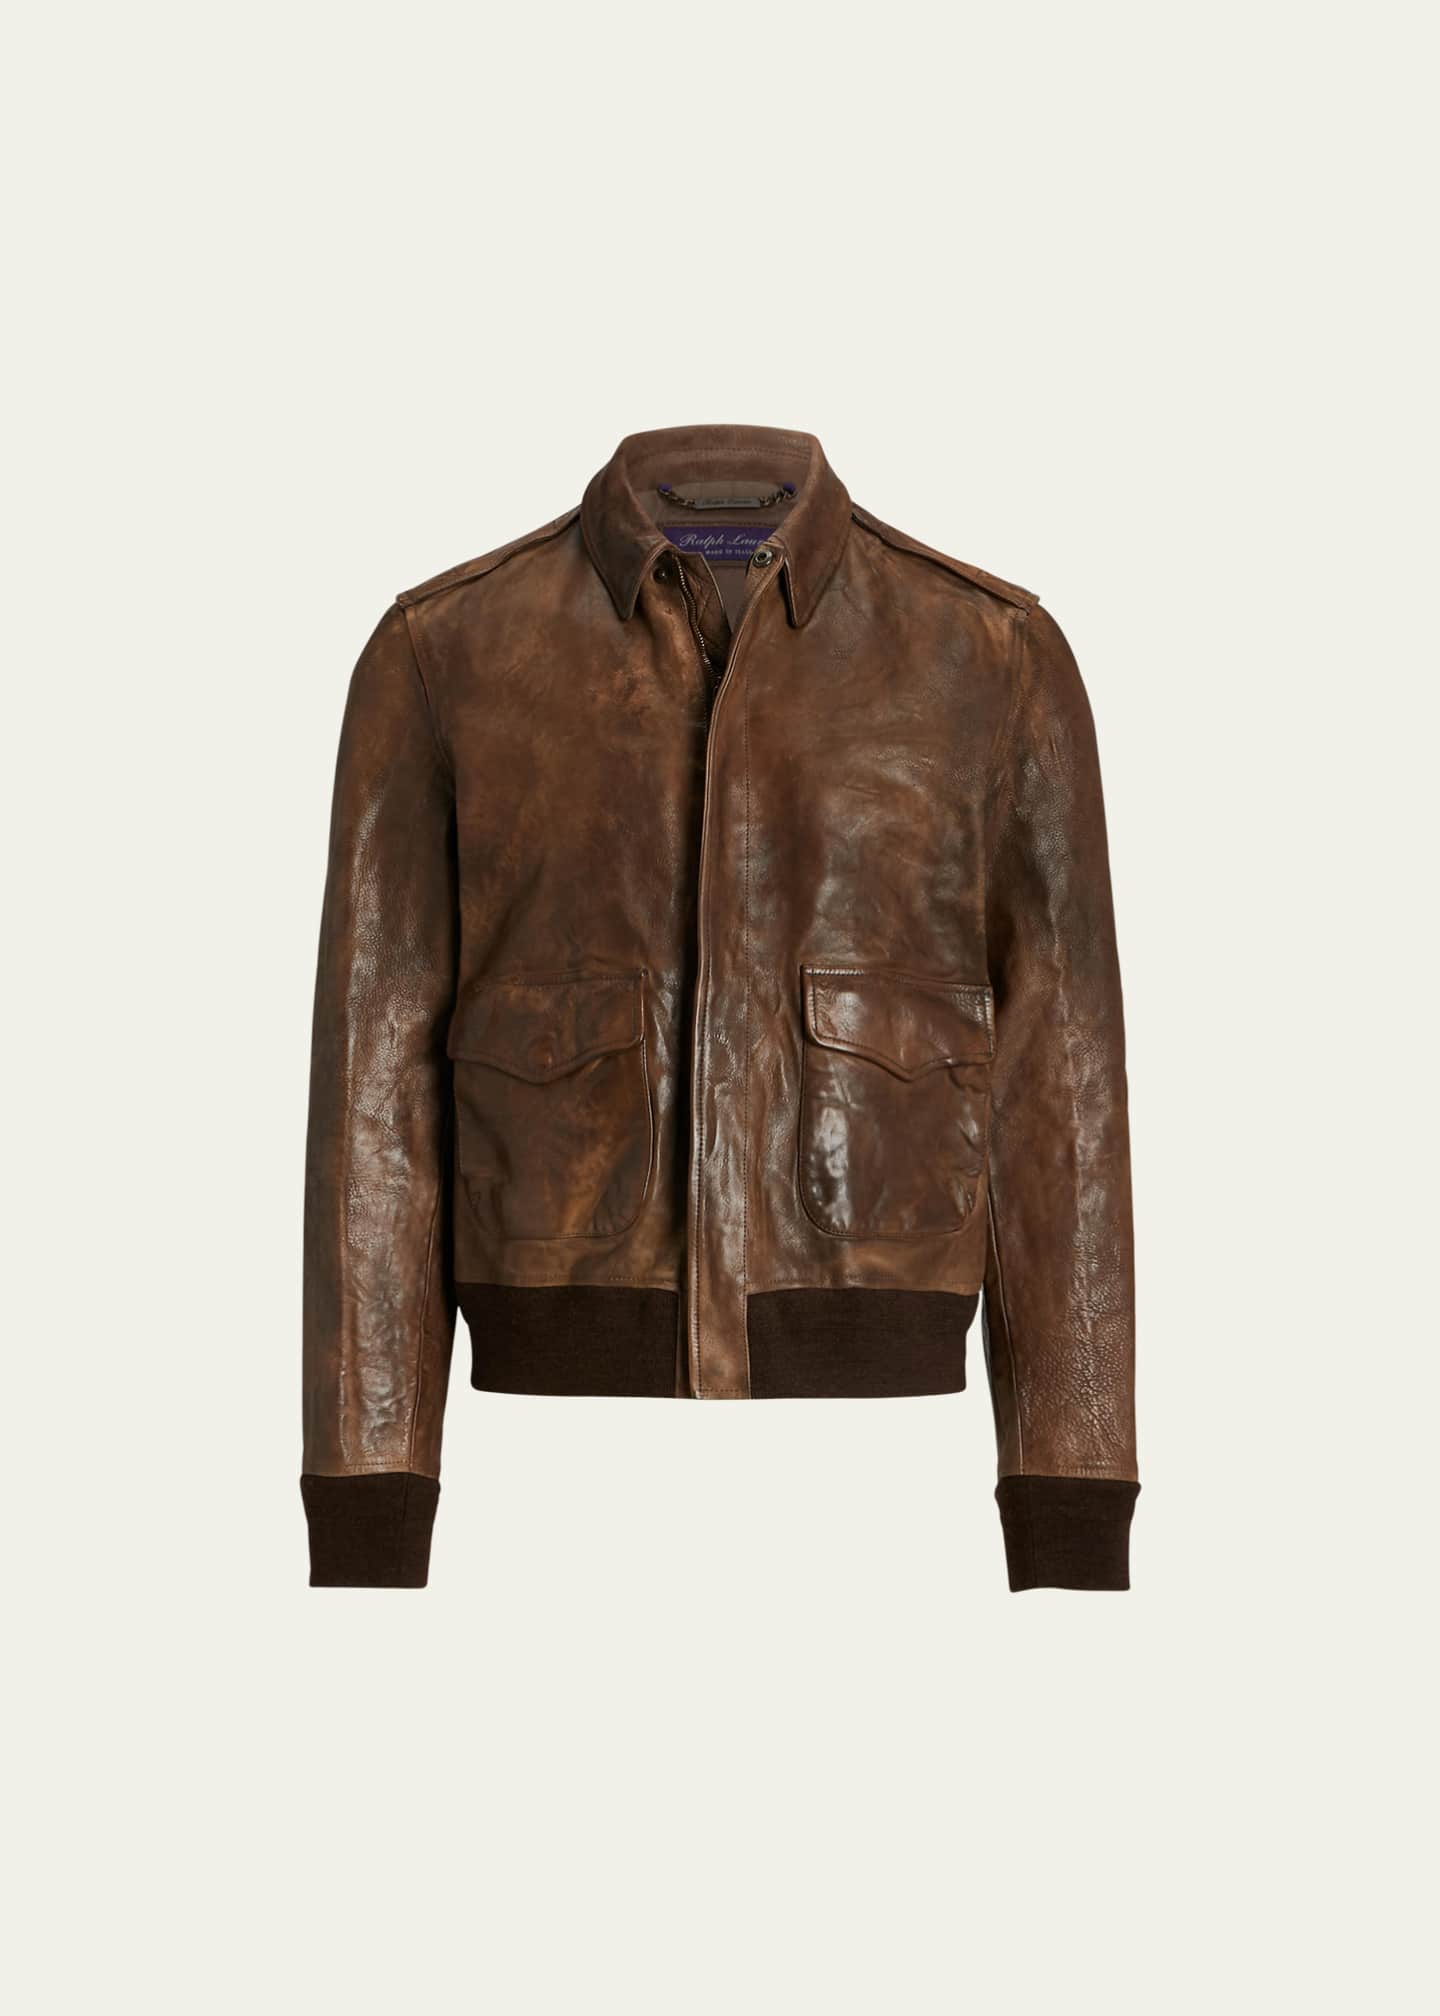 Ralph Lauren Purple Label Ridley Leather Bomber Jacket Vintage Brown